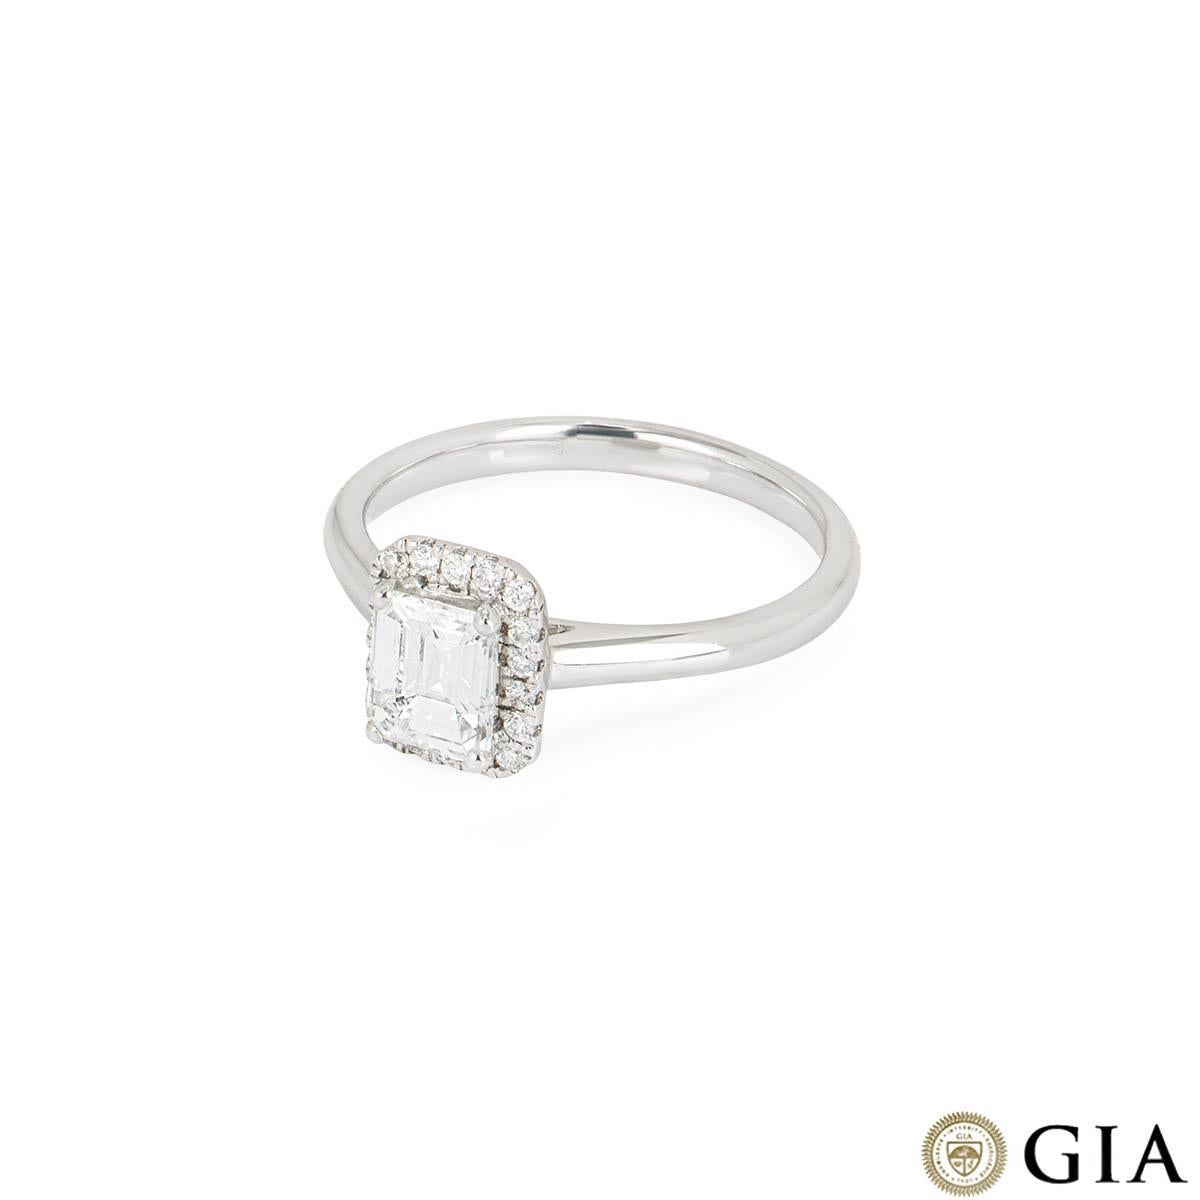 Women's GIA Certified Emerald Cut Diamond Engagement Ring 0.74 Carat D/VS2 For Sale